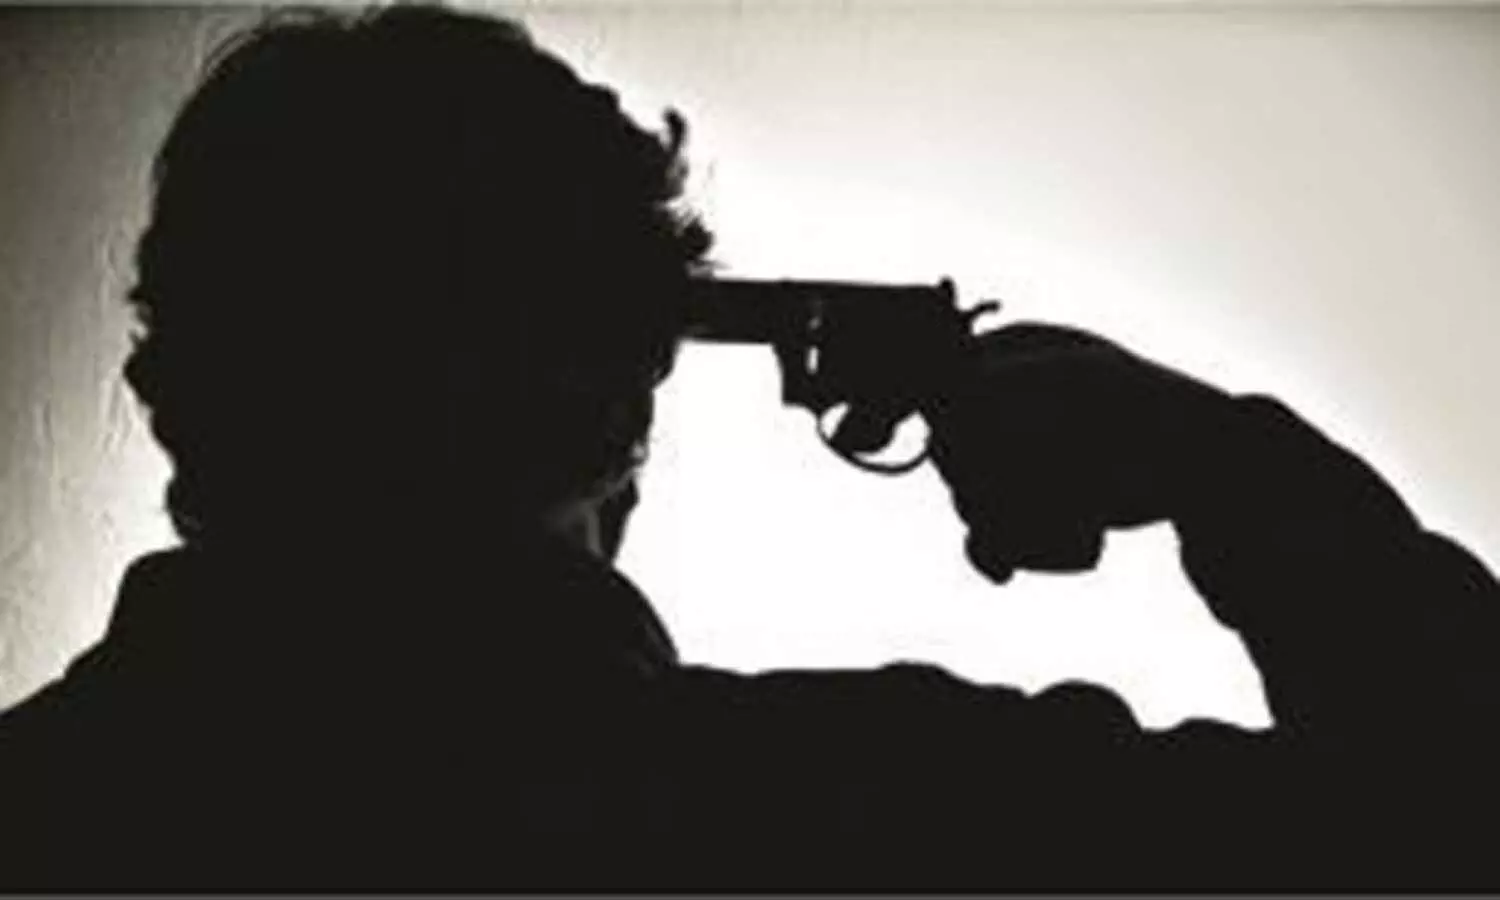 Telangana: 43 year old doctor, MD of Aditya Hospitals shoots self